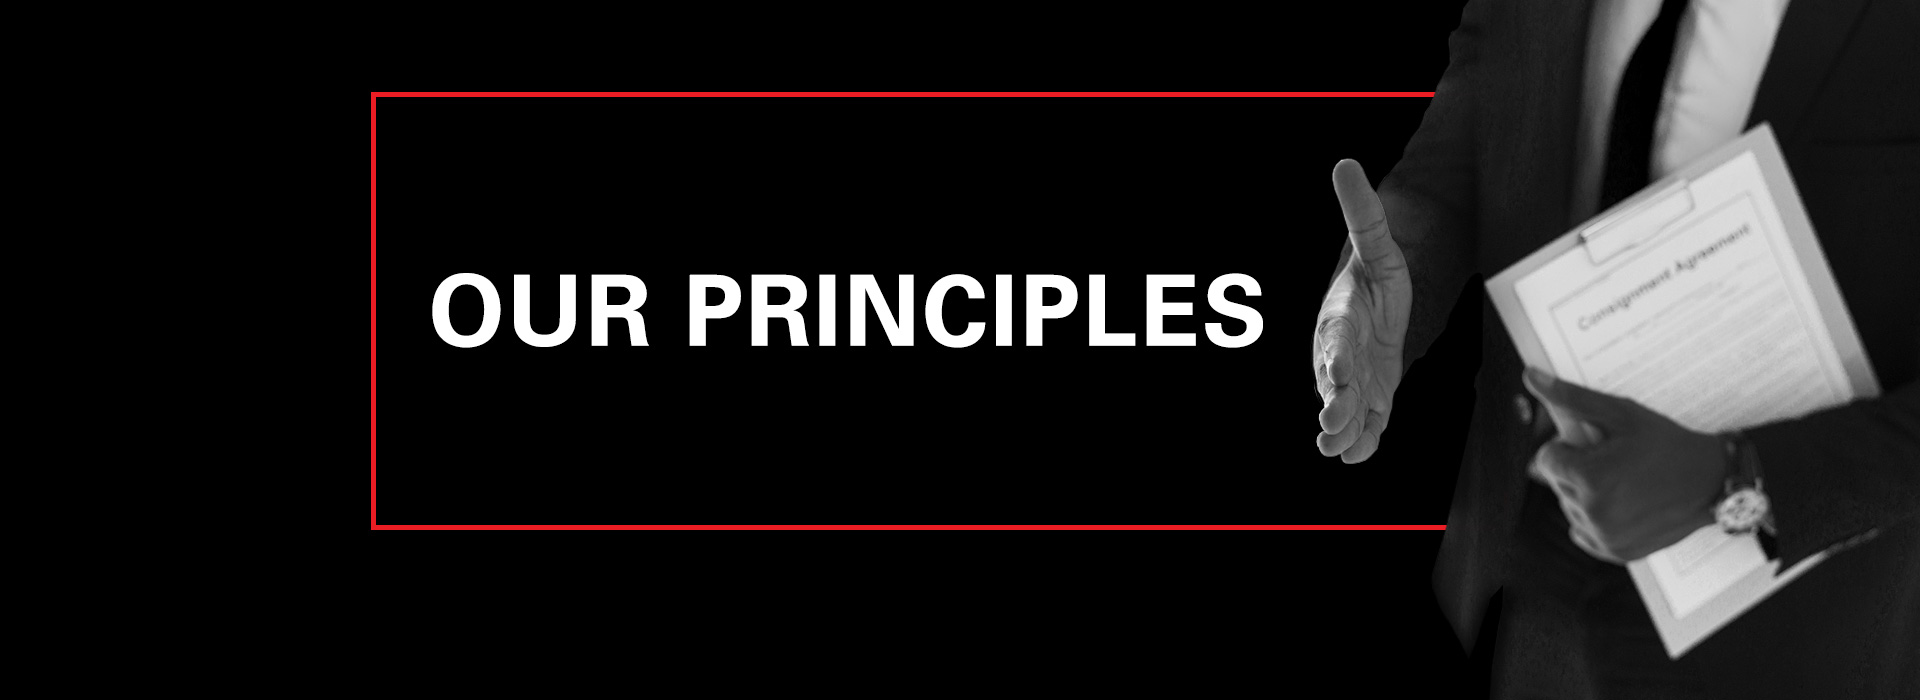 our-principles-banner.jpg